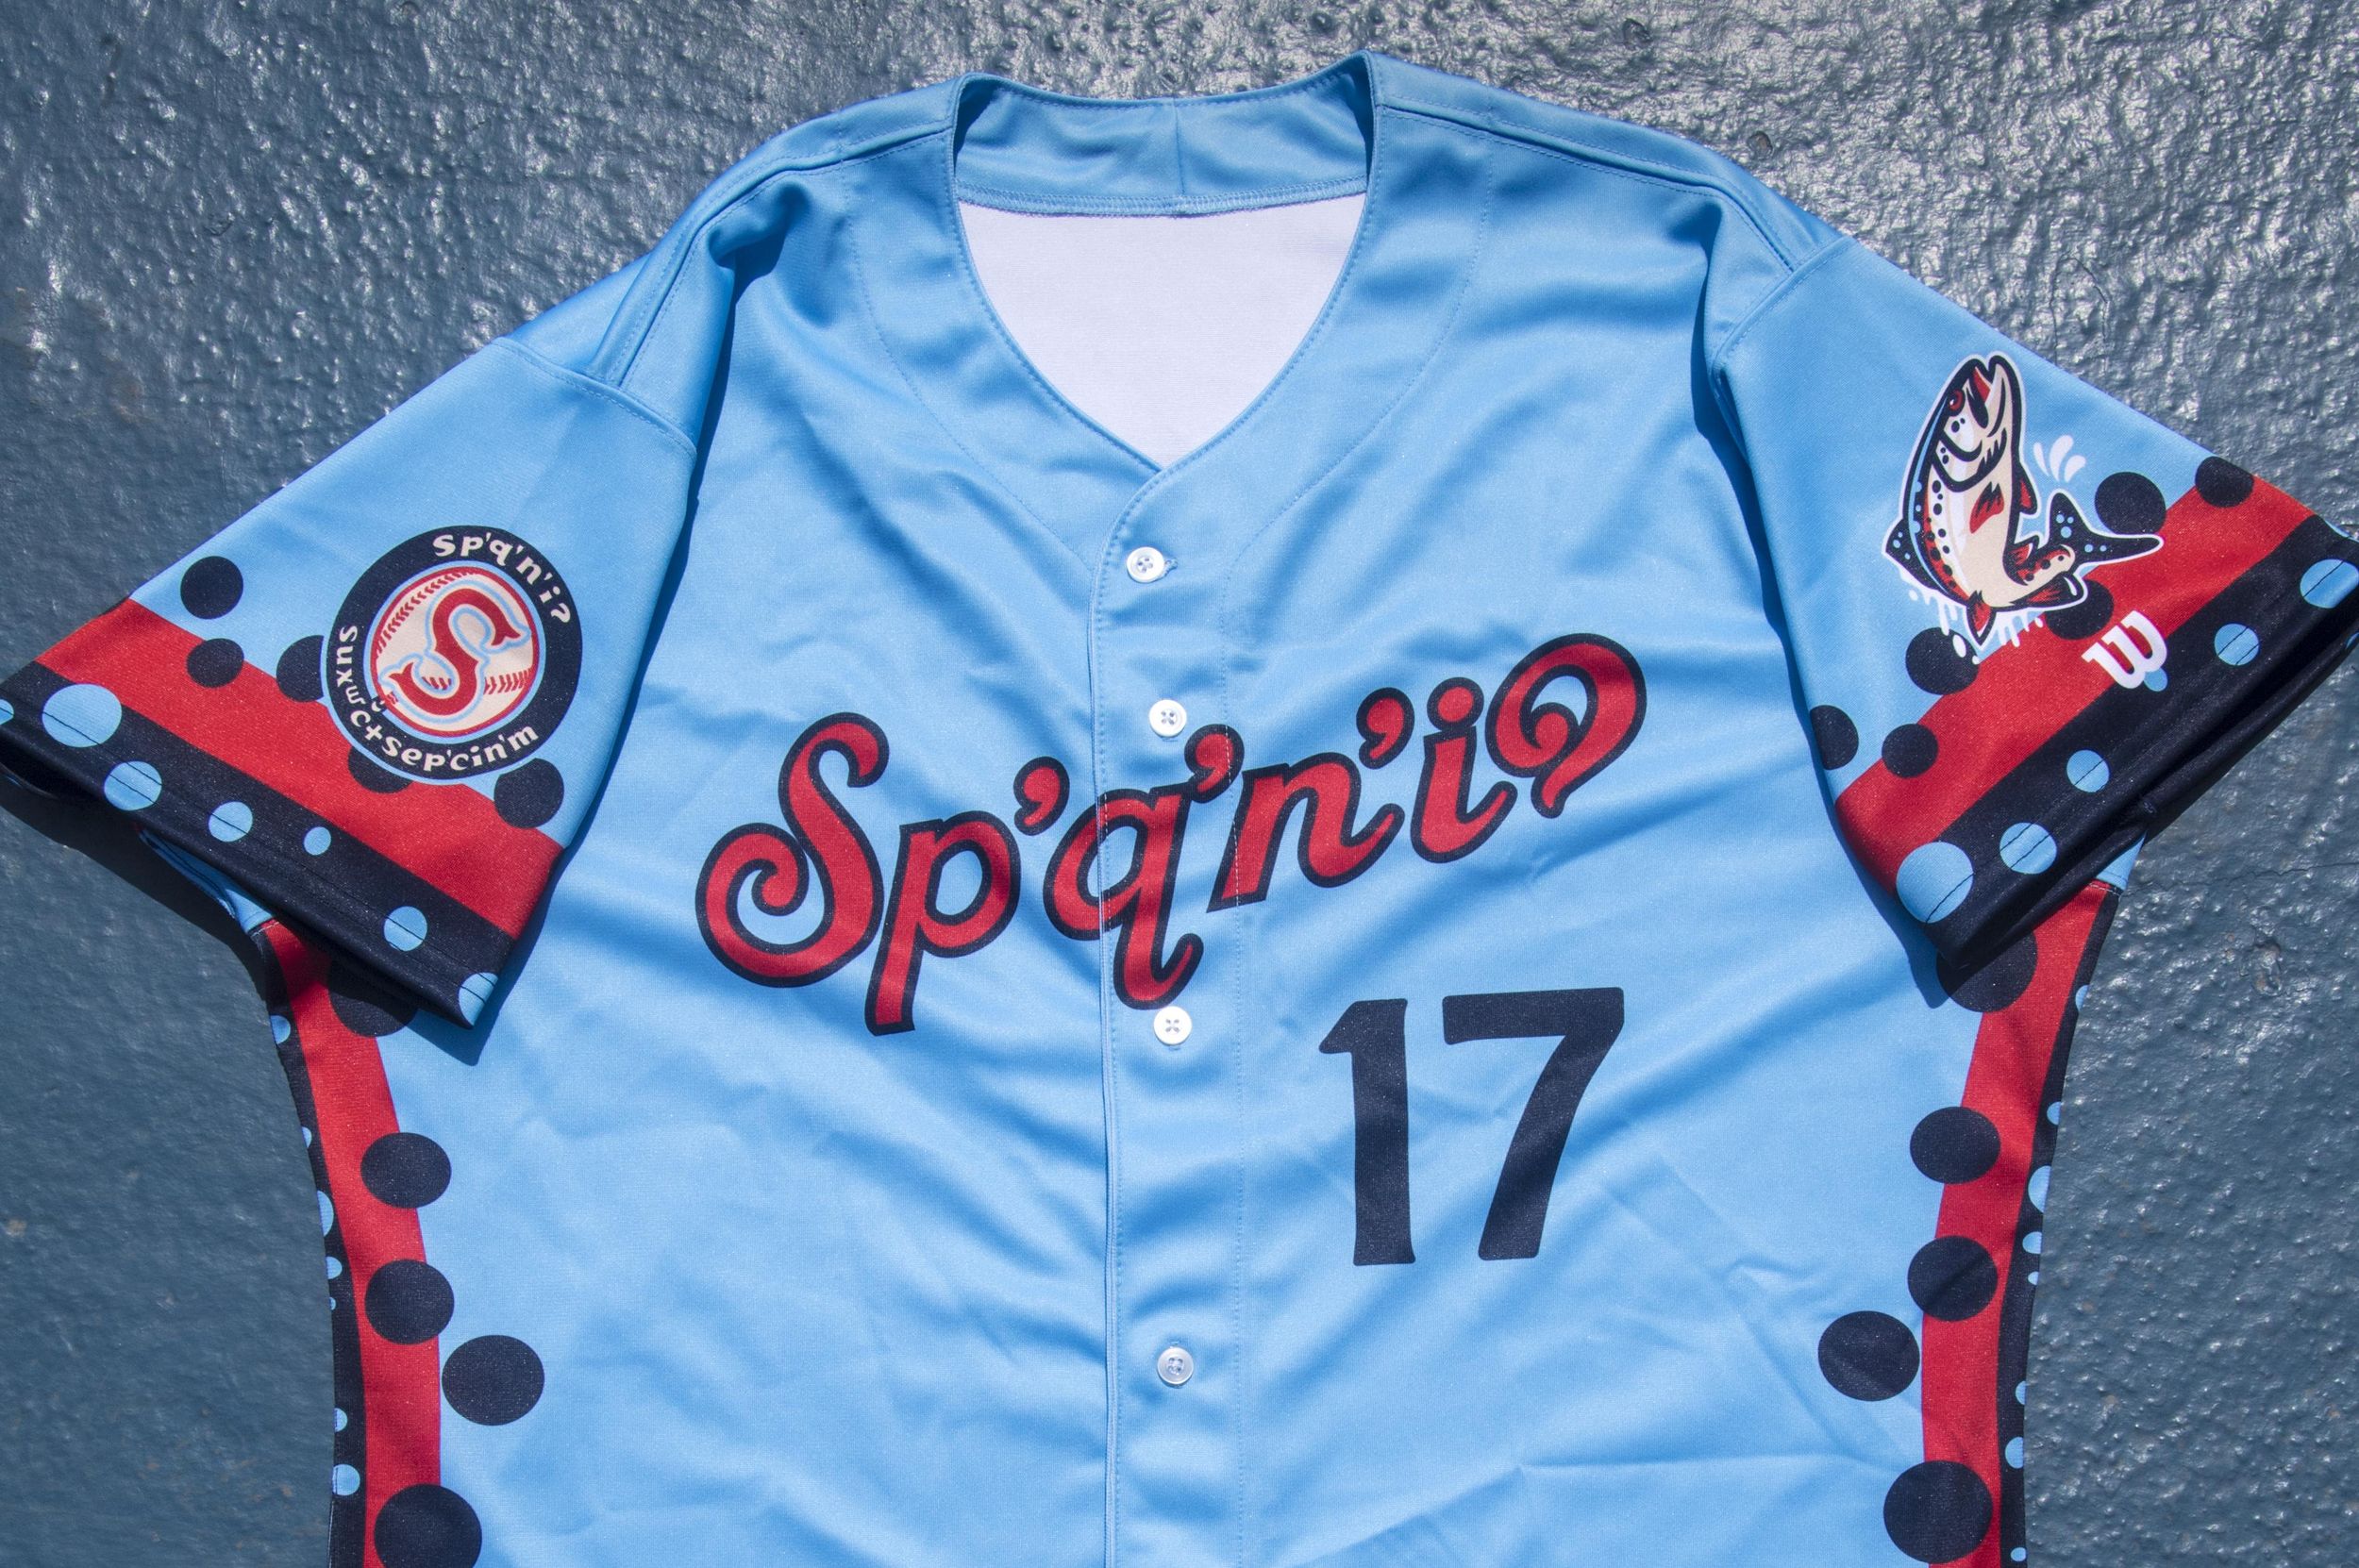 Spokane Indians on X: What's your favorite Spokane Indians jersey